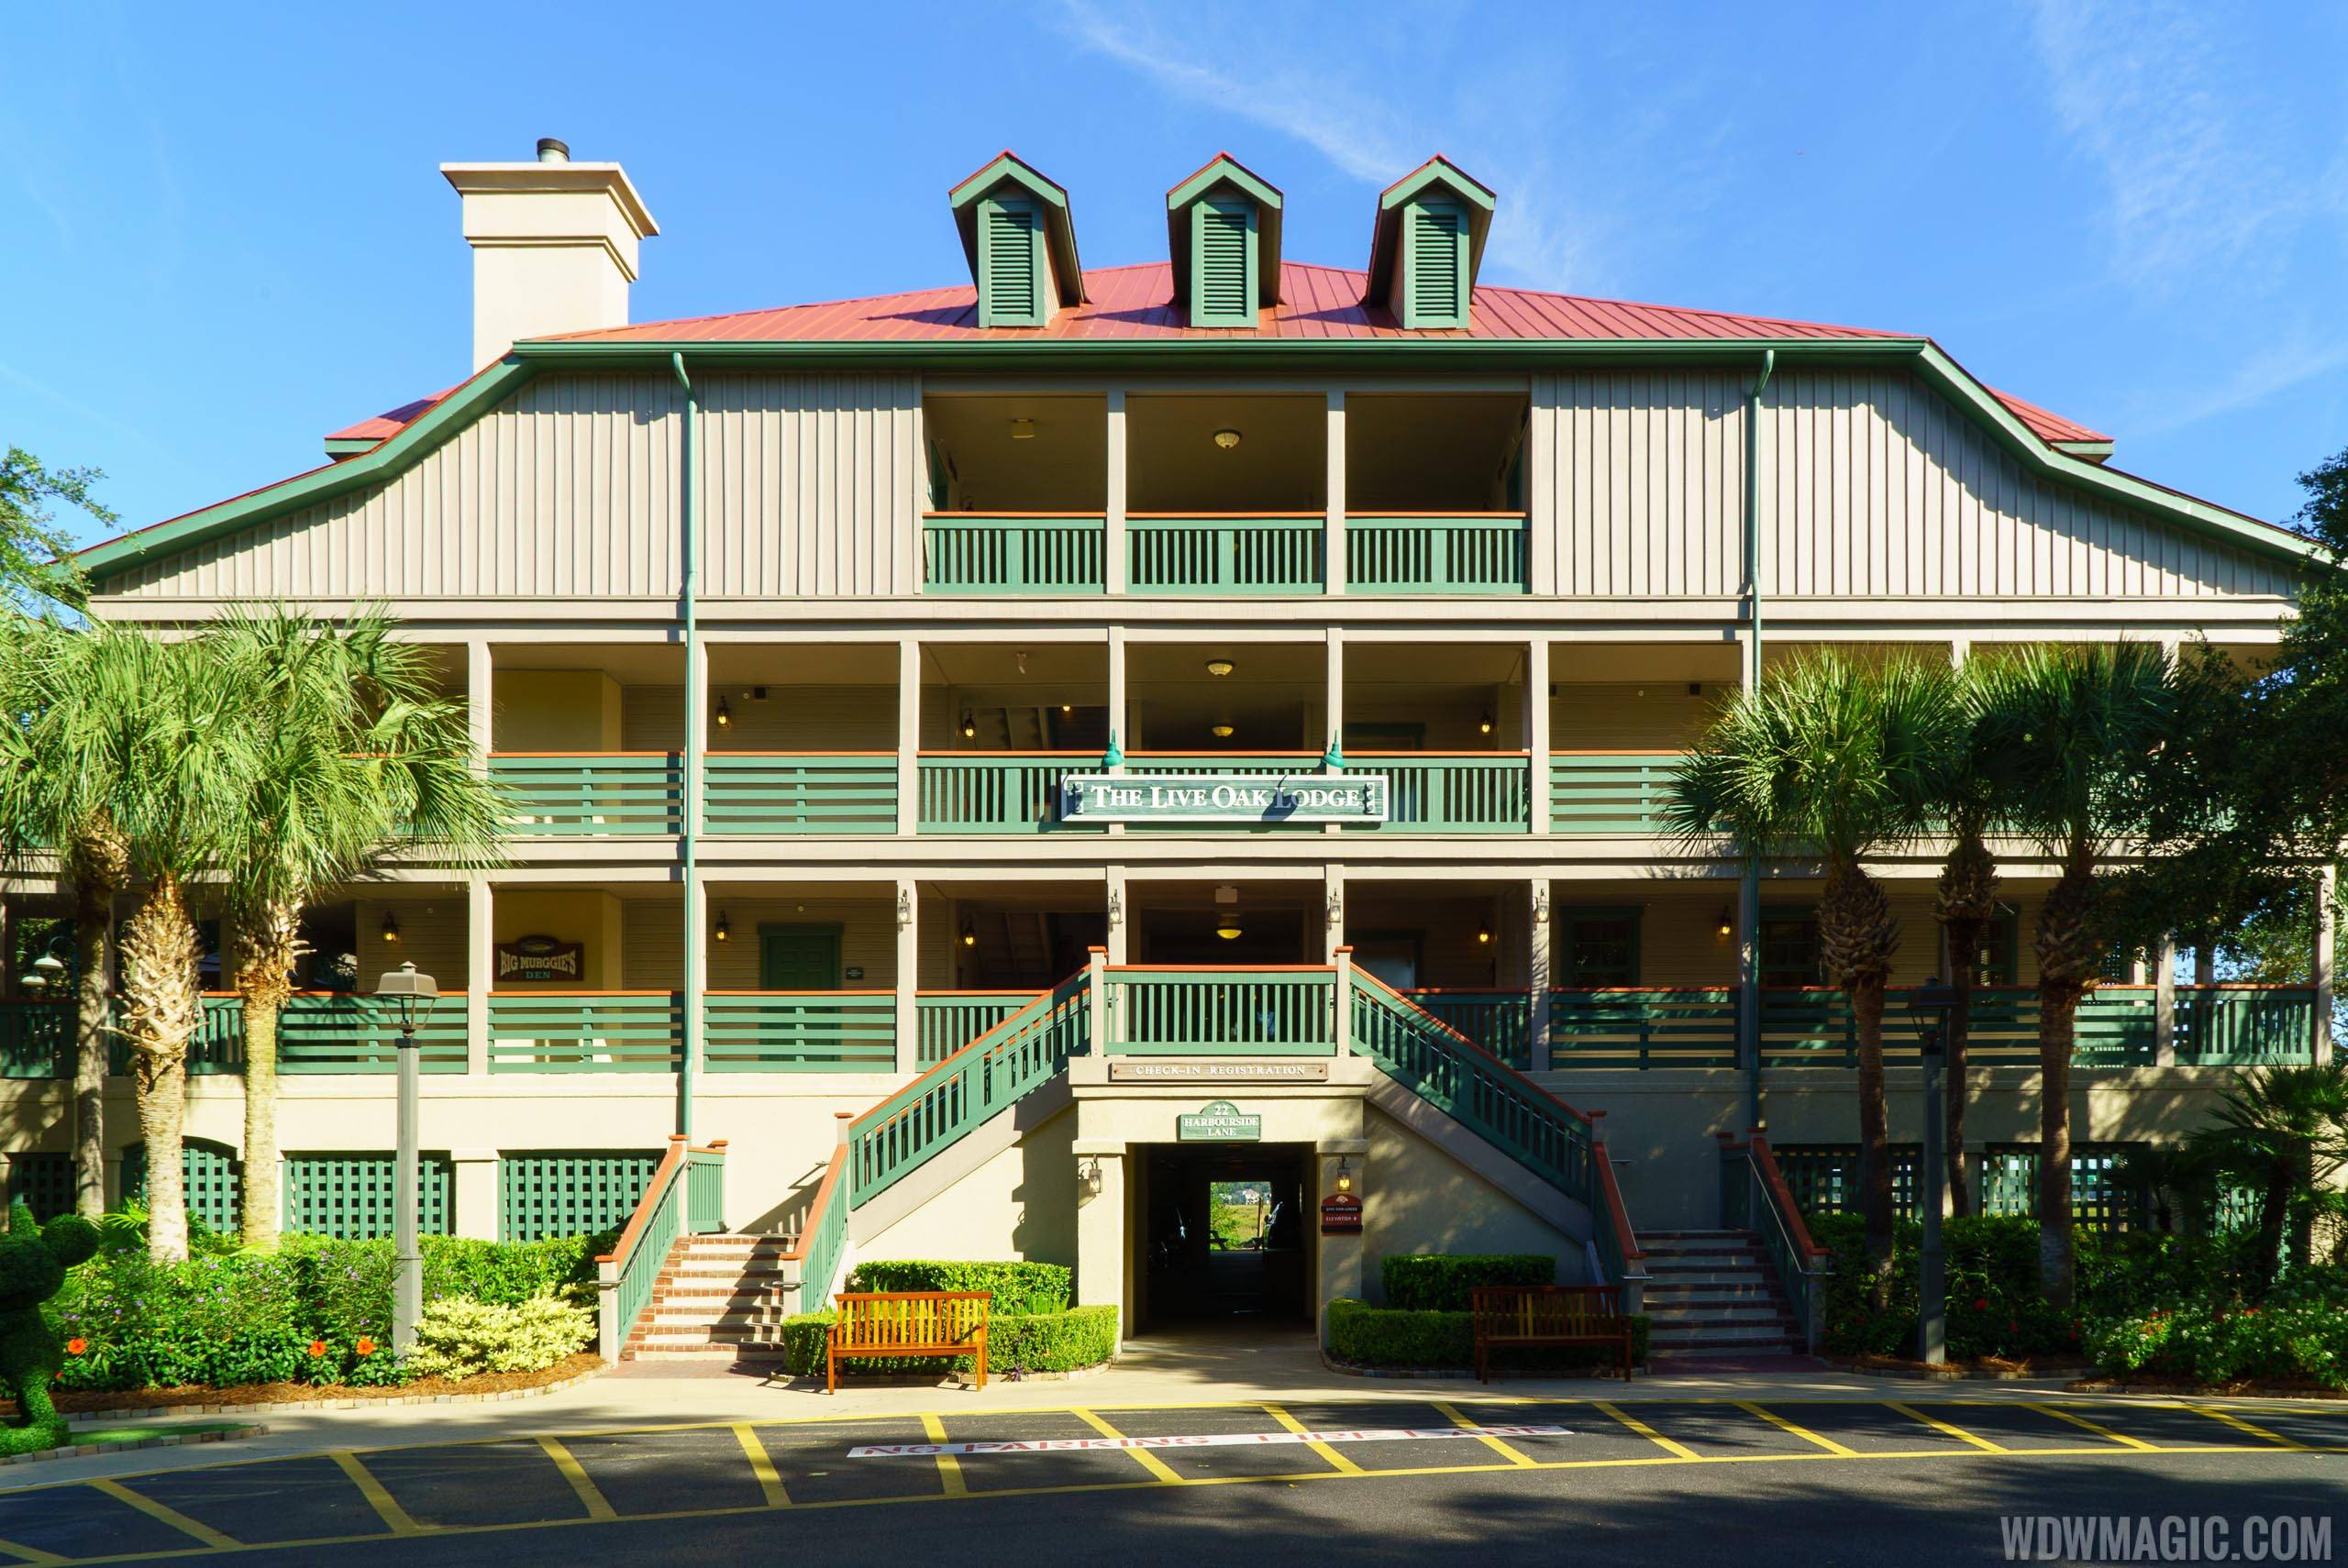 Disney's Hilton Head Island Resort - The Live Oak Lodge